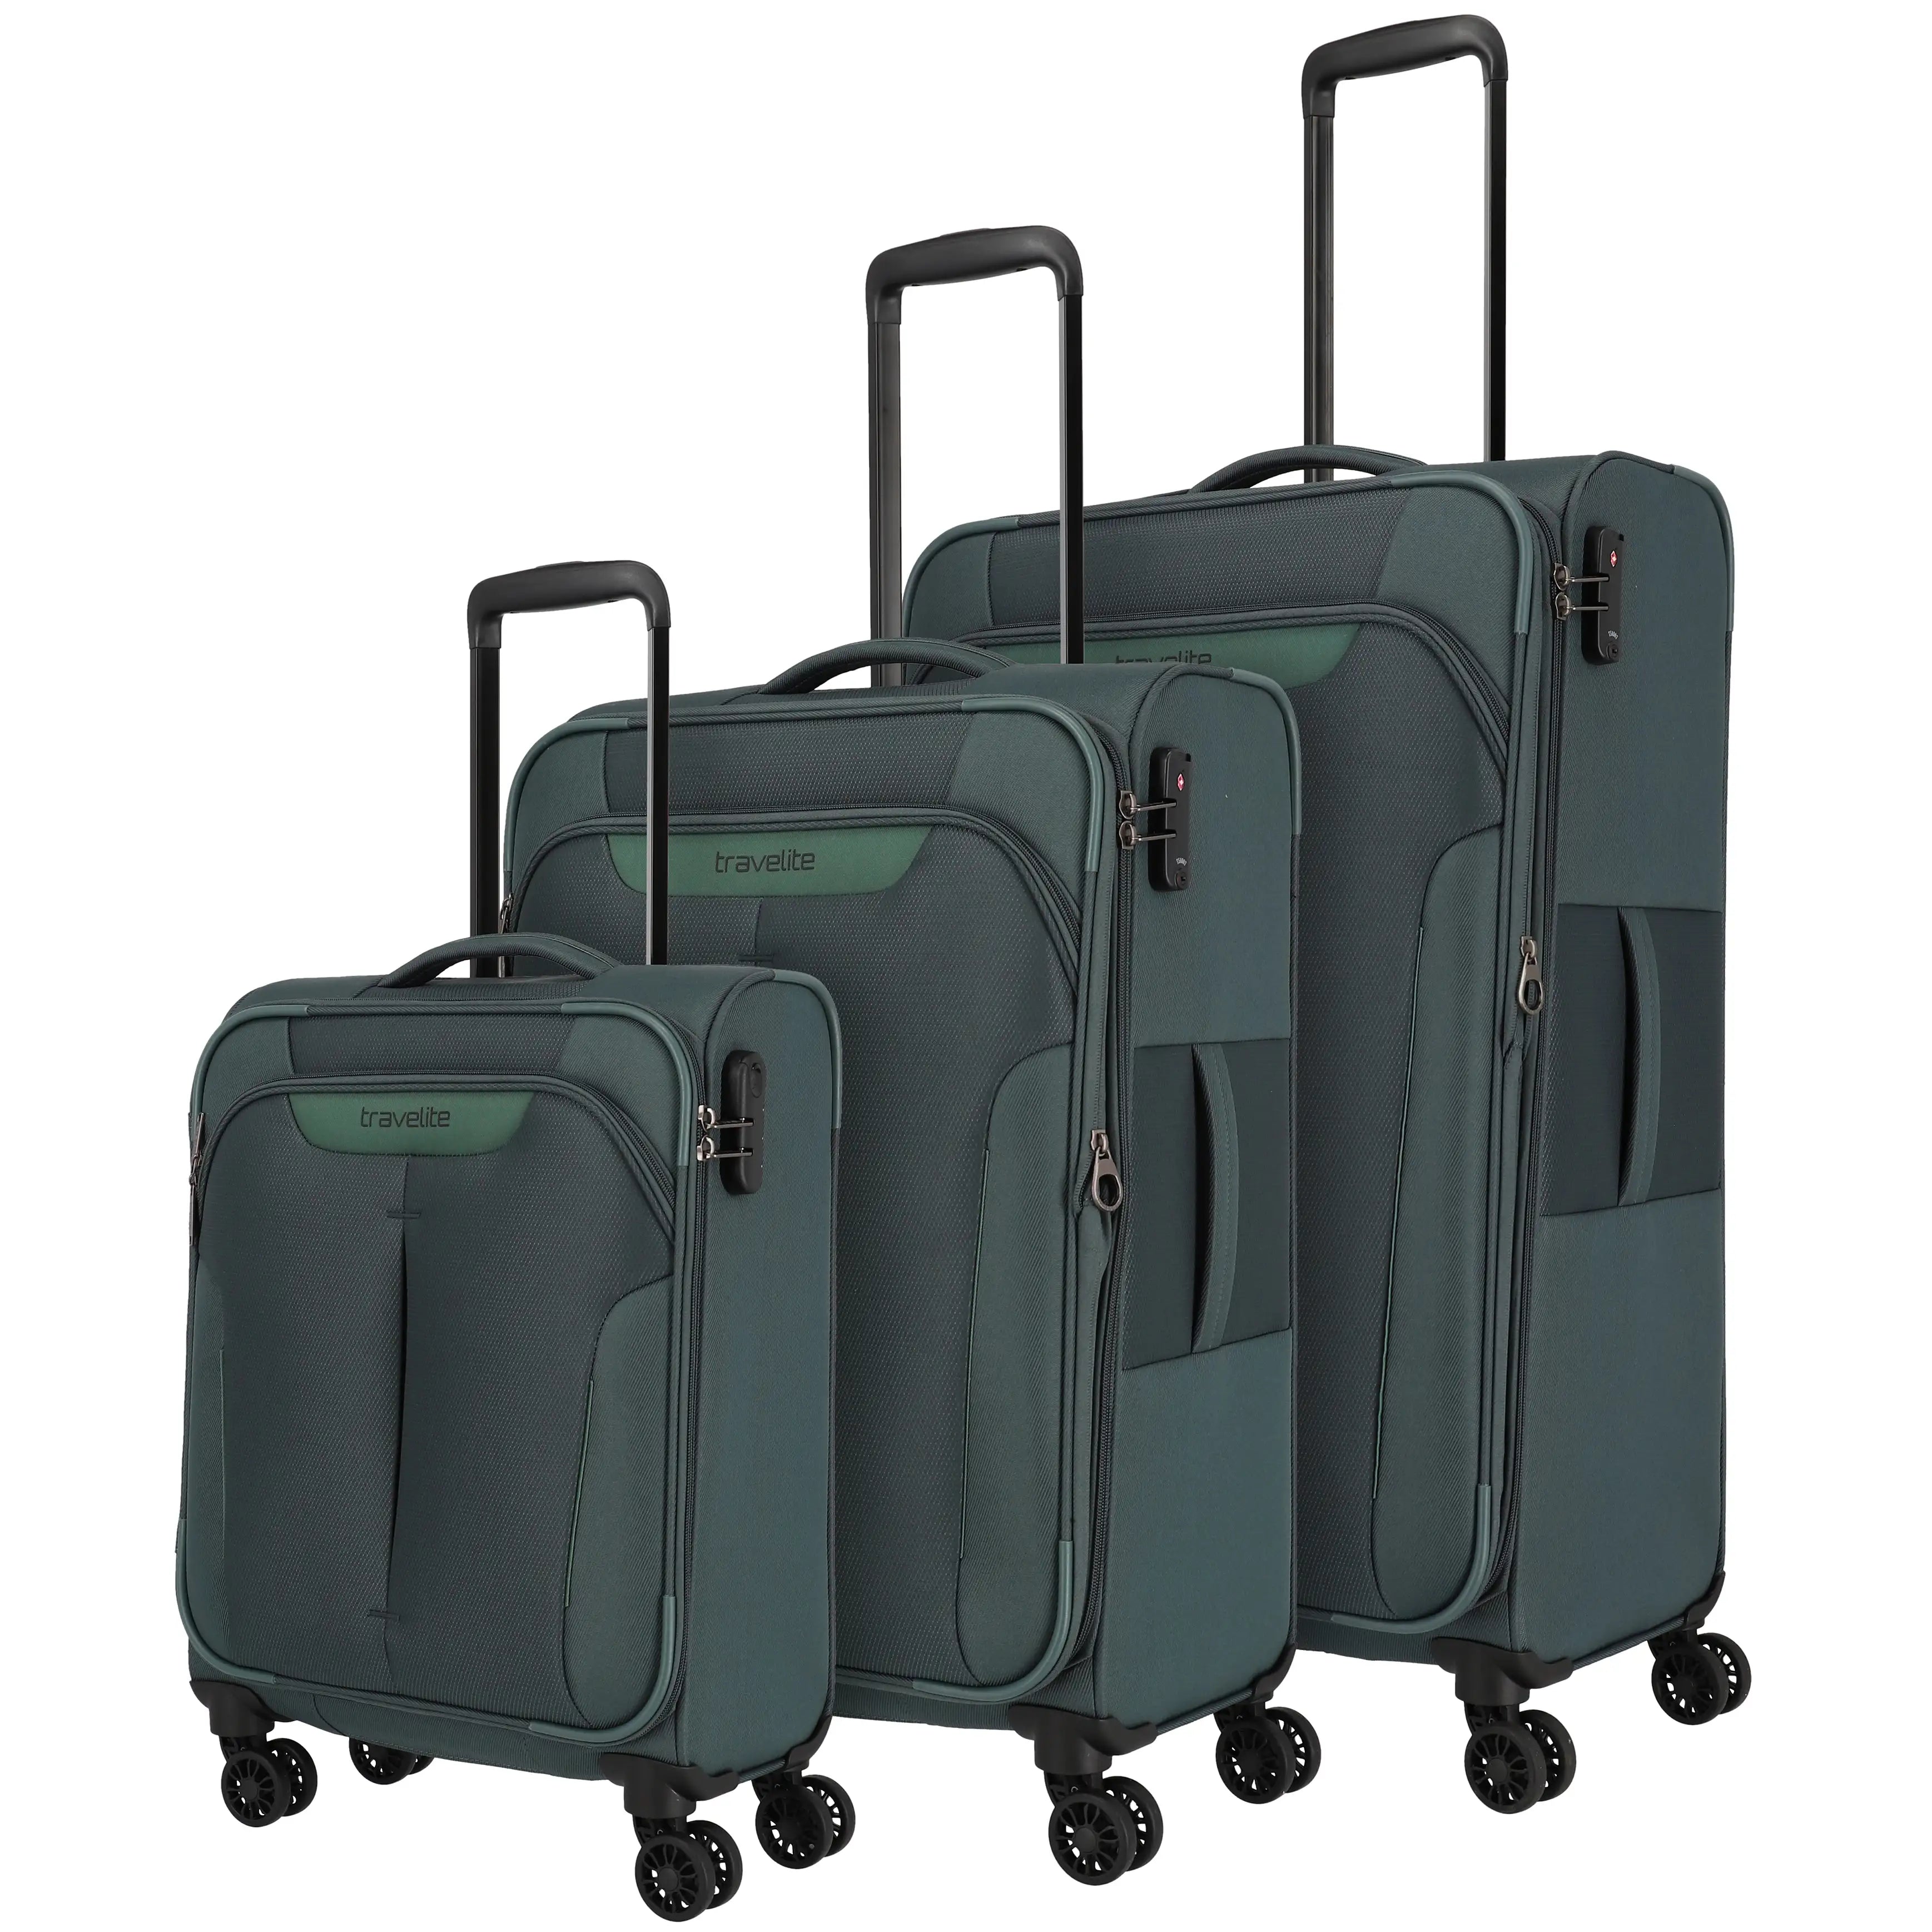 Travelite Croatia 4w L/M/S suitcase set - fir green